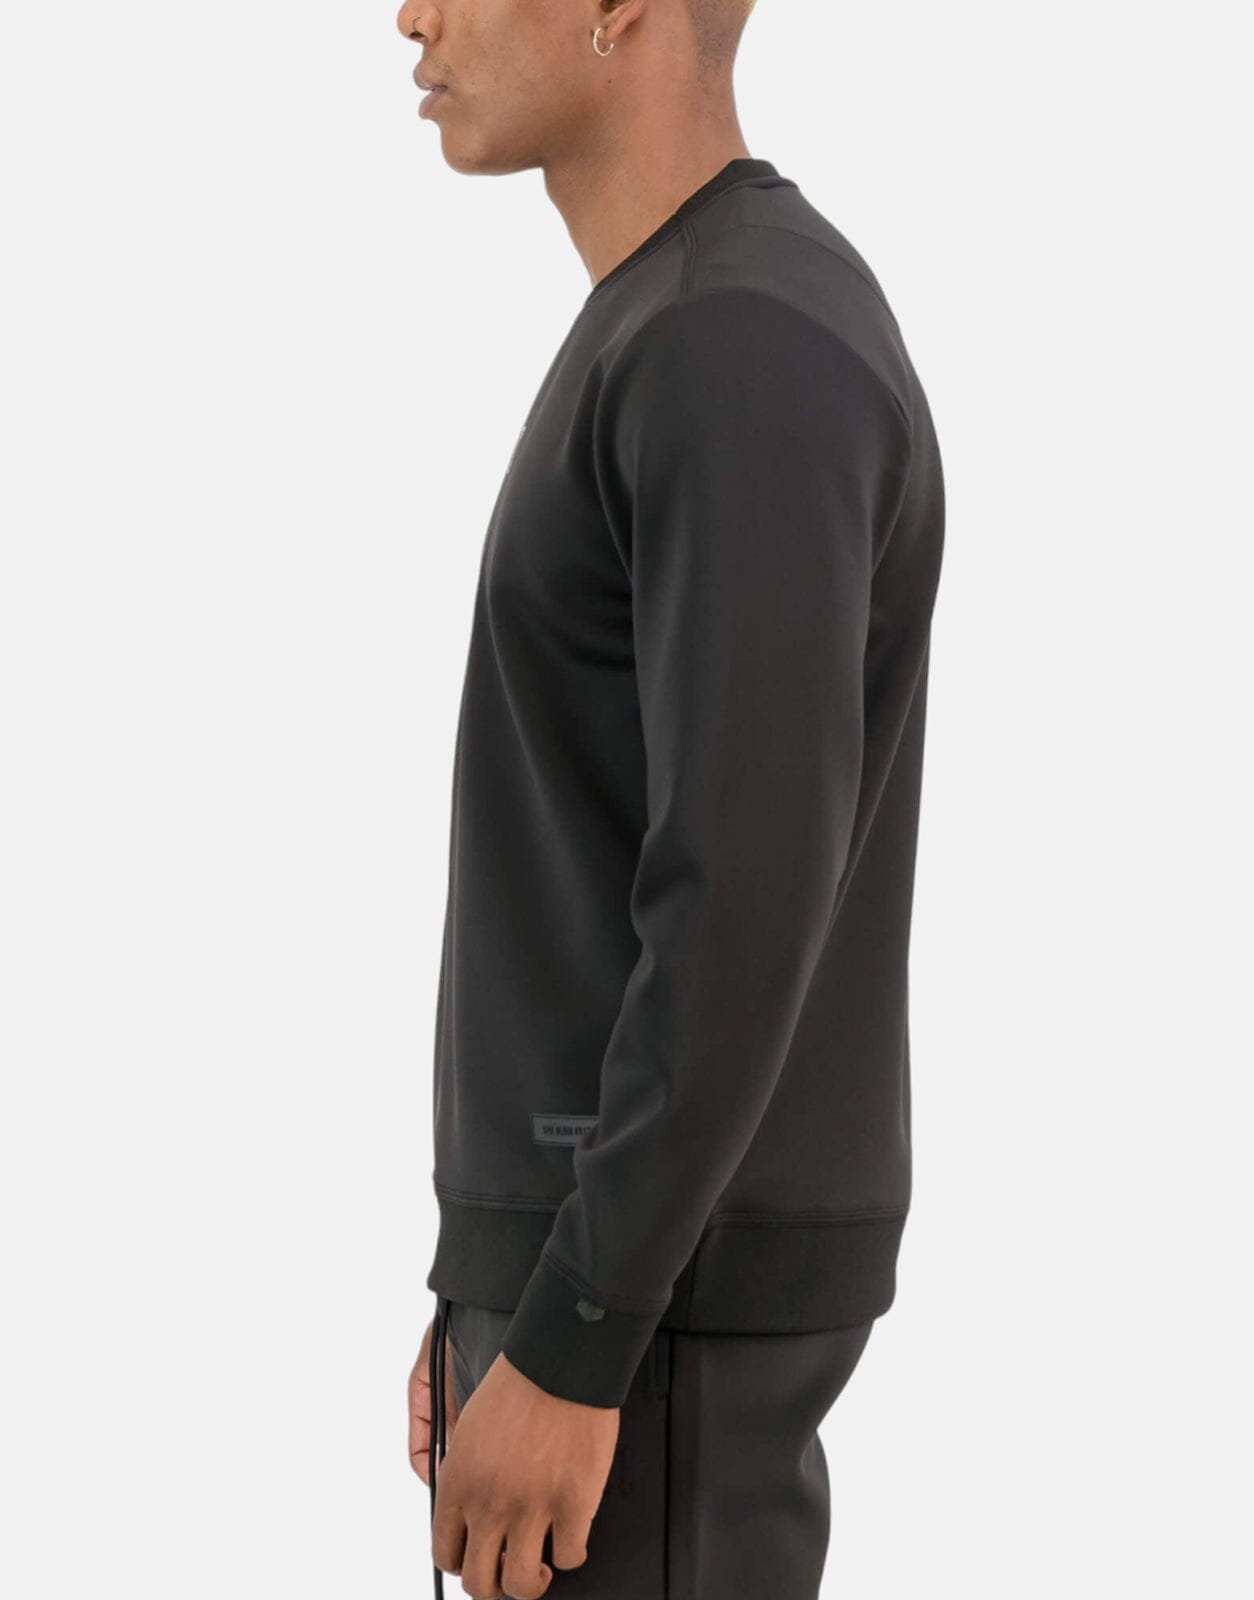 SPCC Sark Black Sweatshirt - Subwear